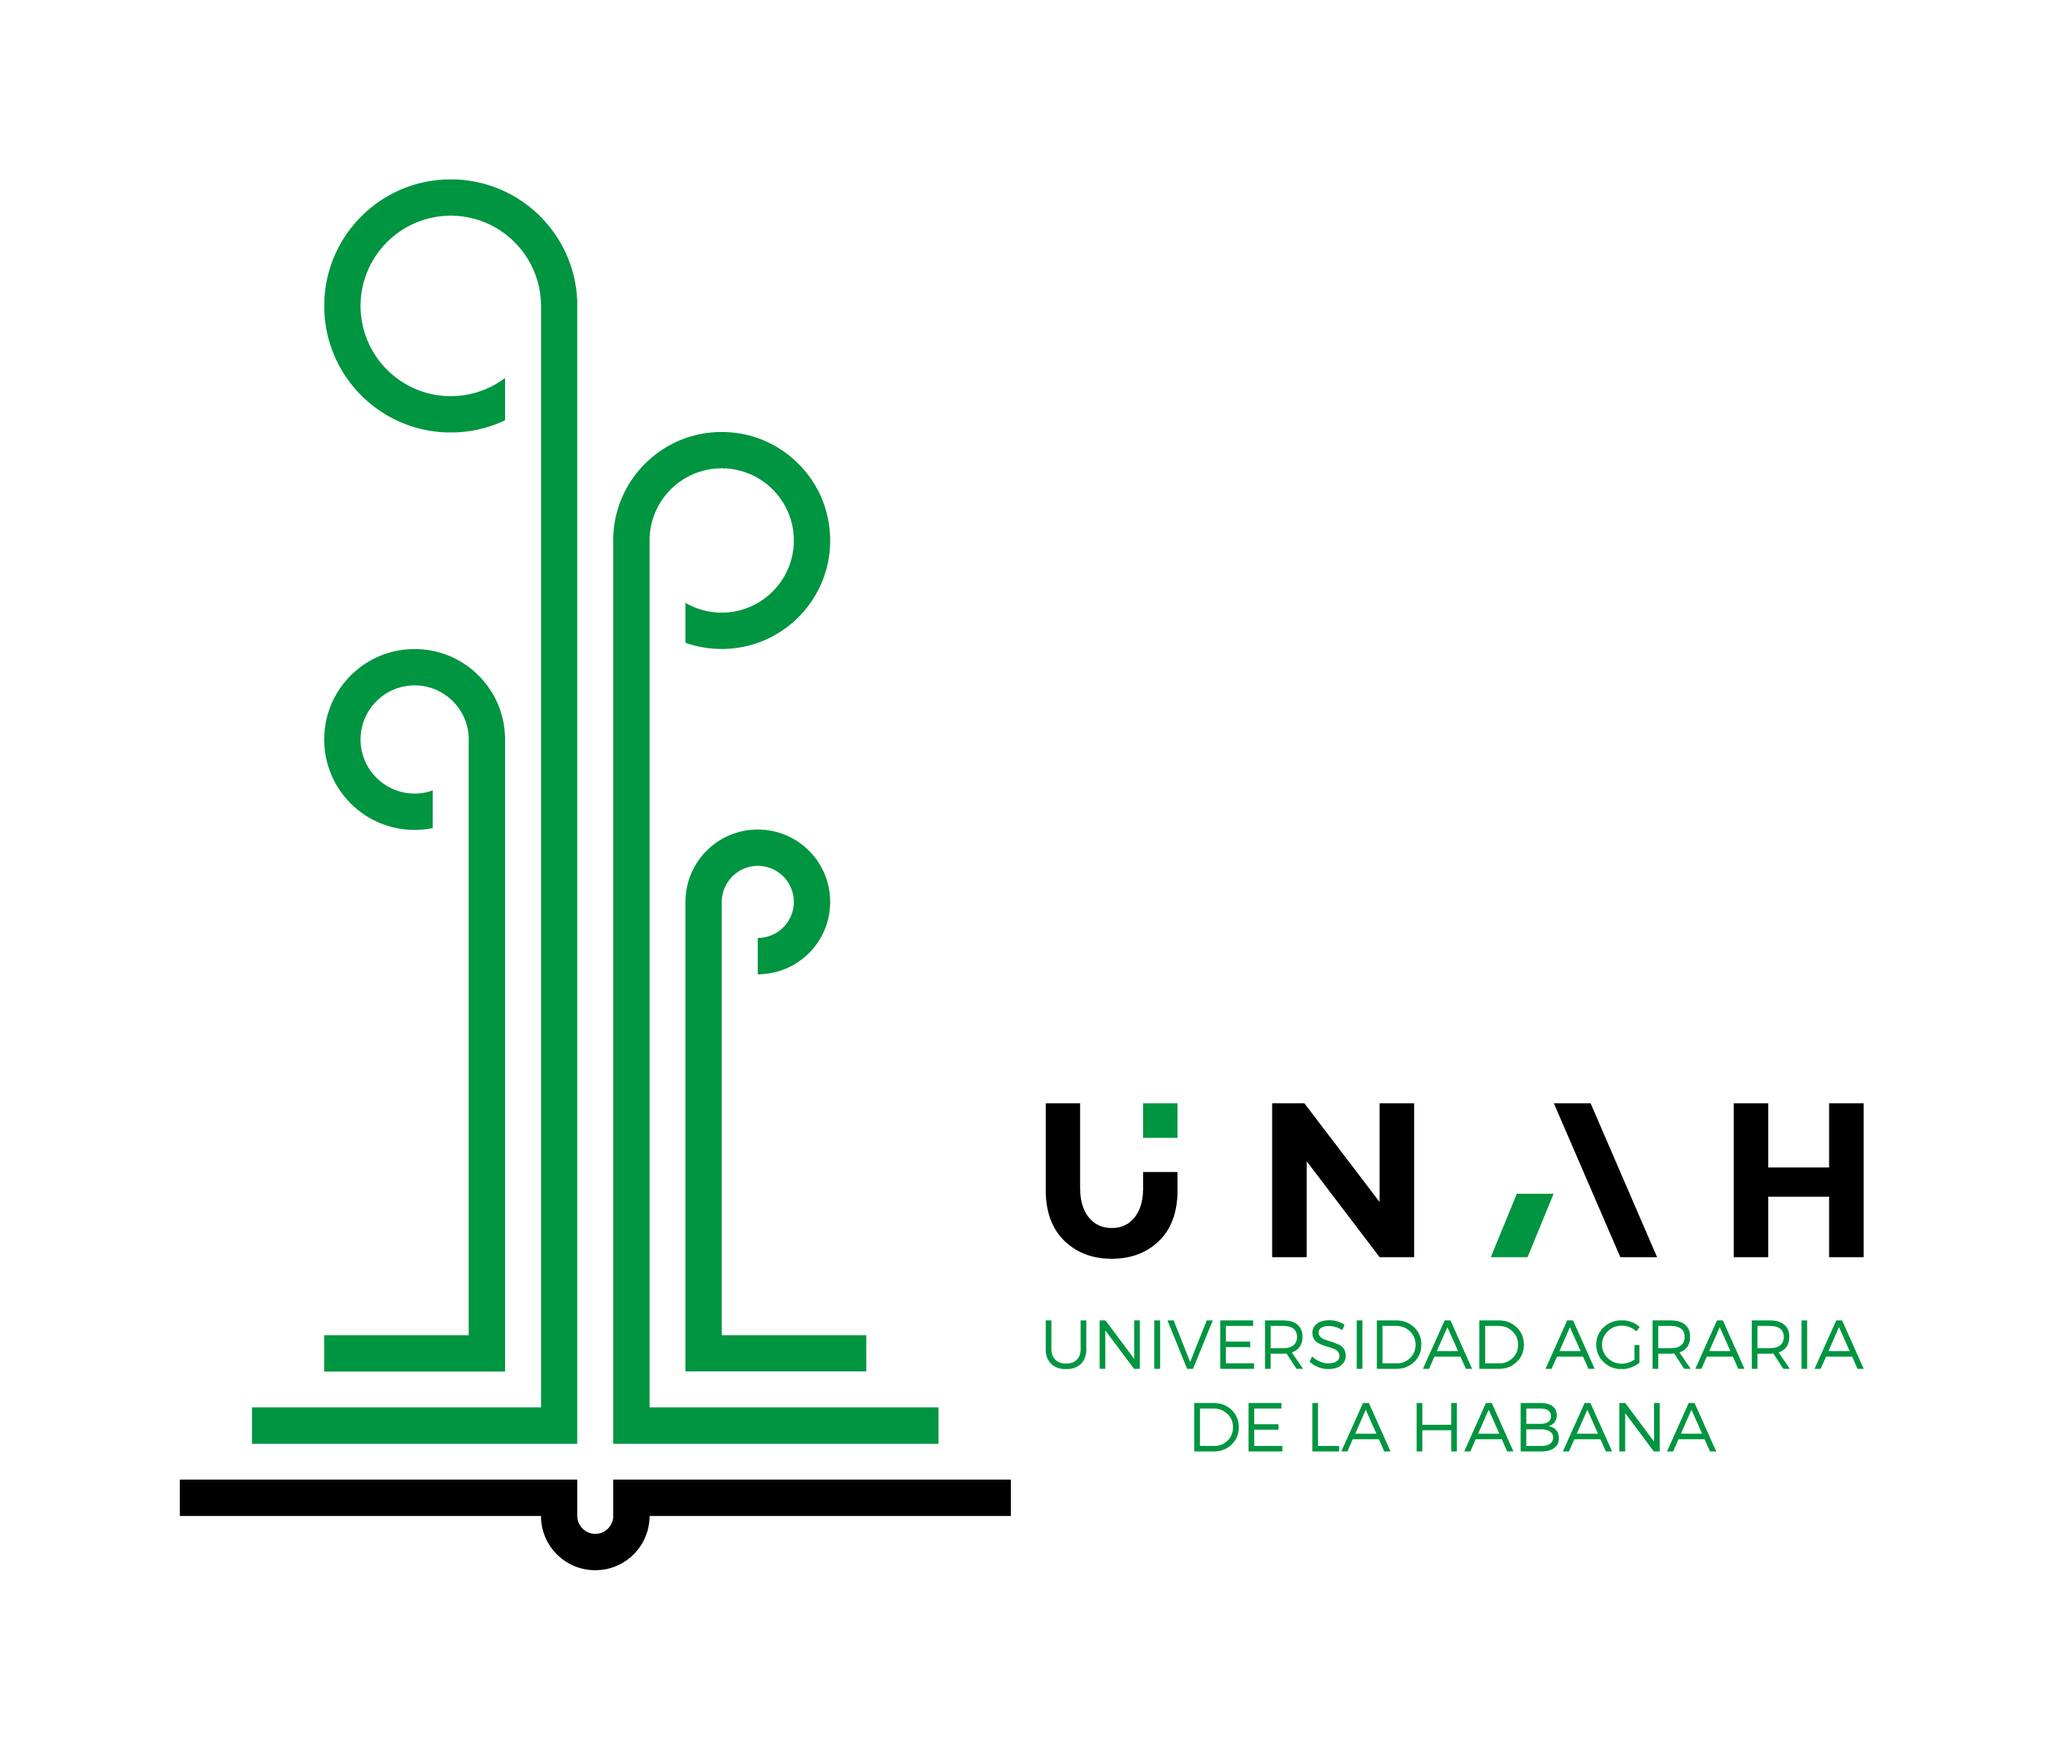 Agrarian University of Havana announces enrollment for the 2022 course.